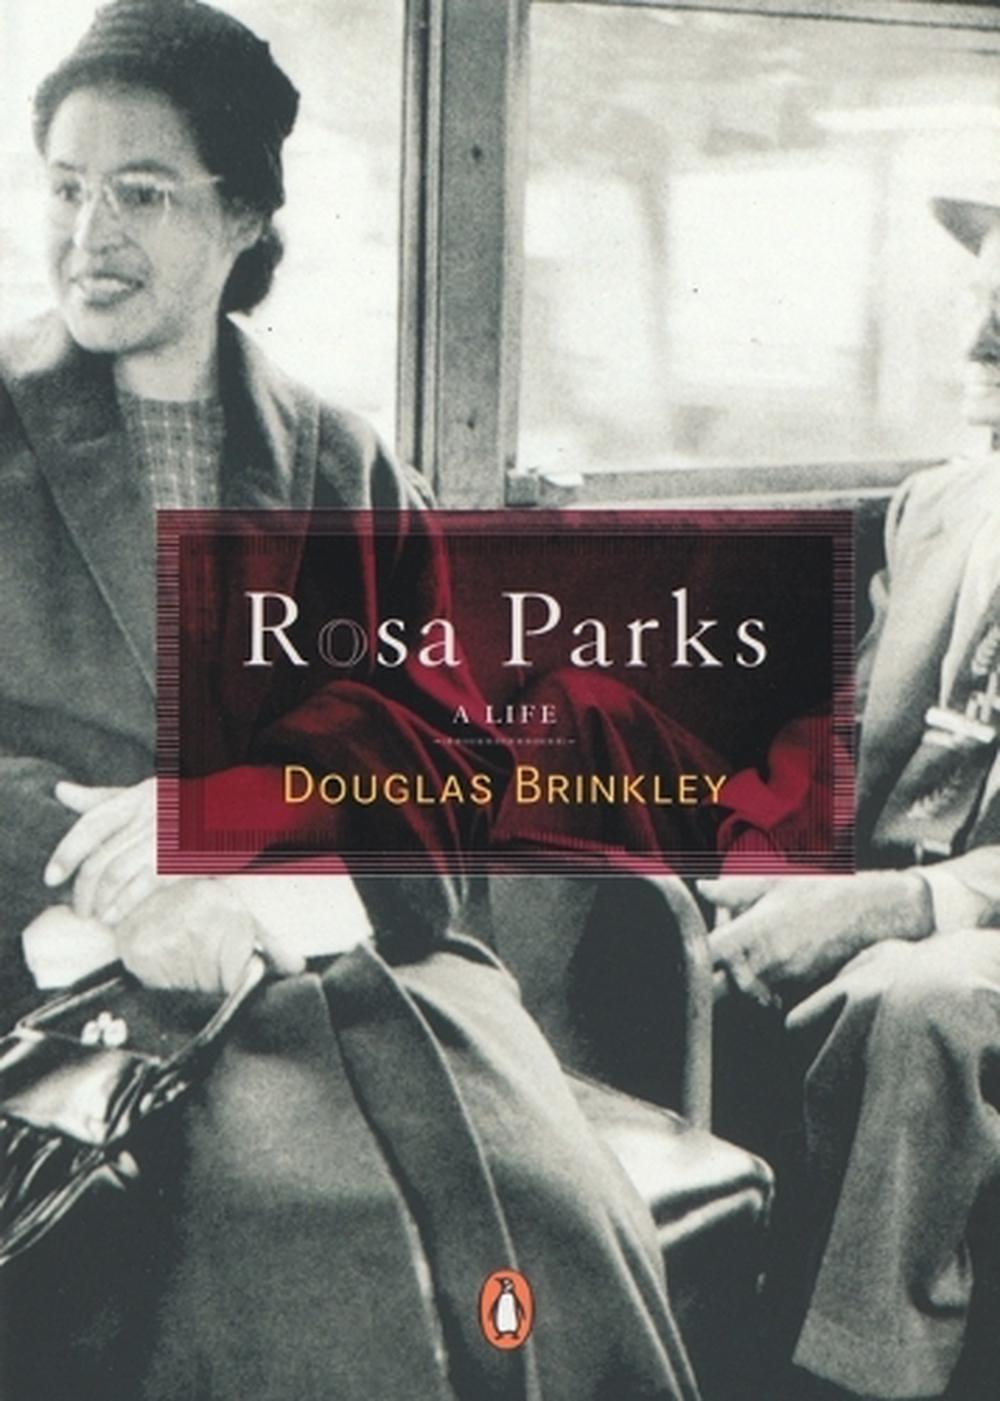 douglas brinkley biography rosa parks